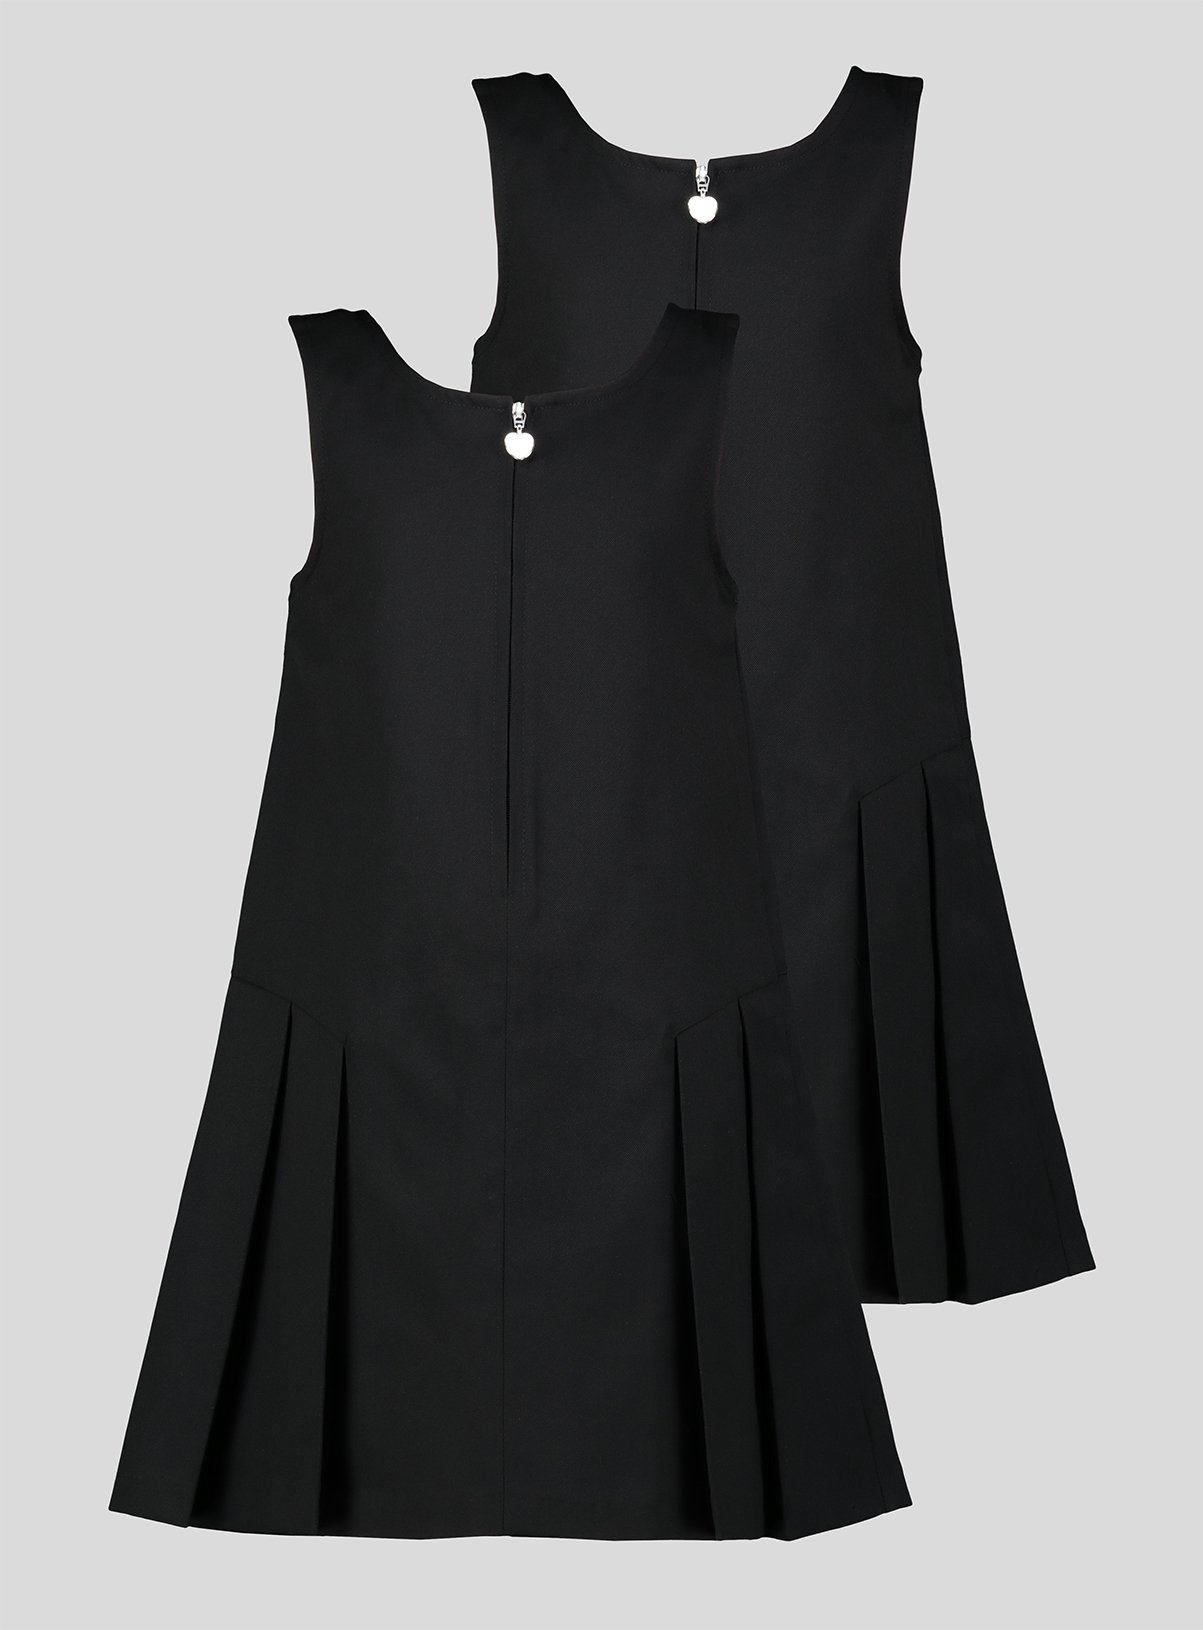 black pinafore dress for school